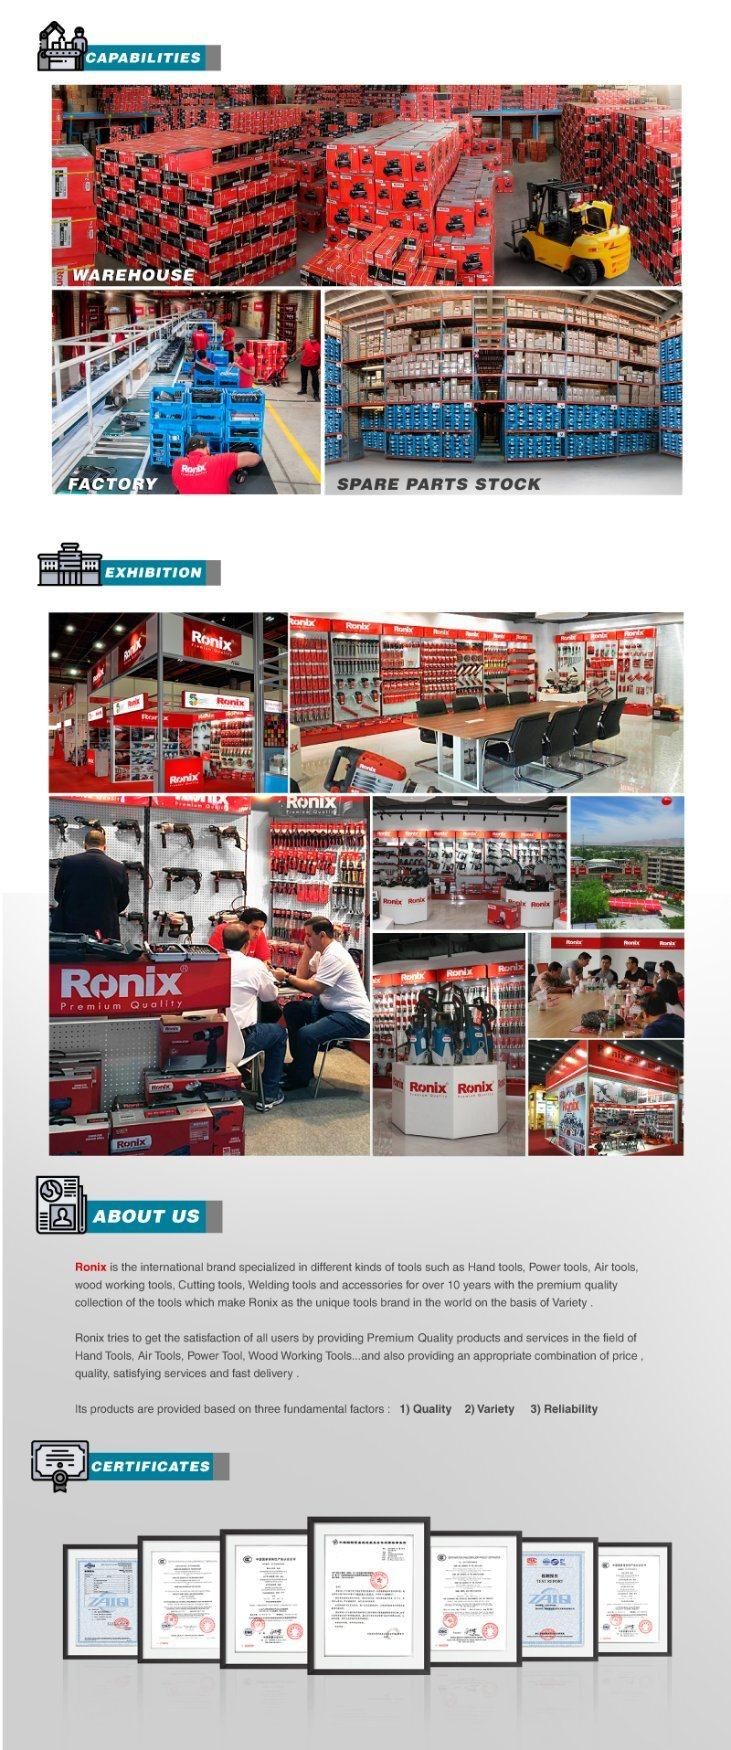 Ronix Model 8530 DIY Mini Portabel 3.6V Cordless Li-on Screwdriver Drill